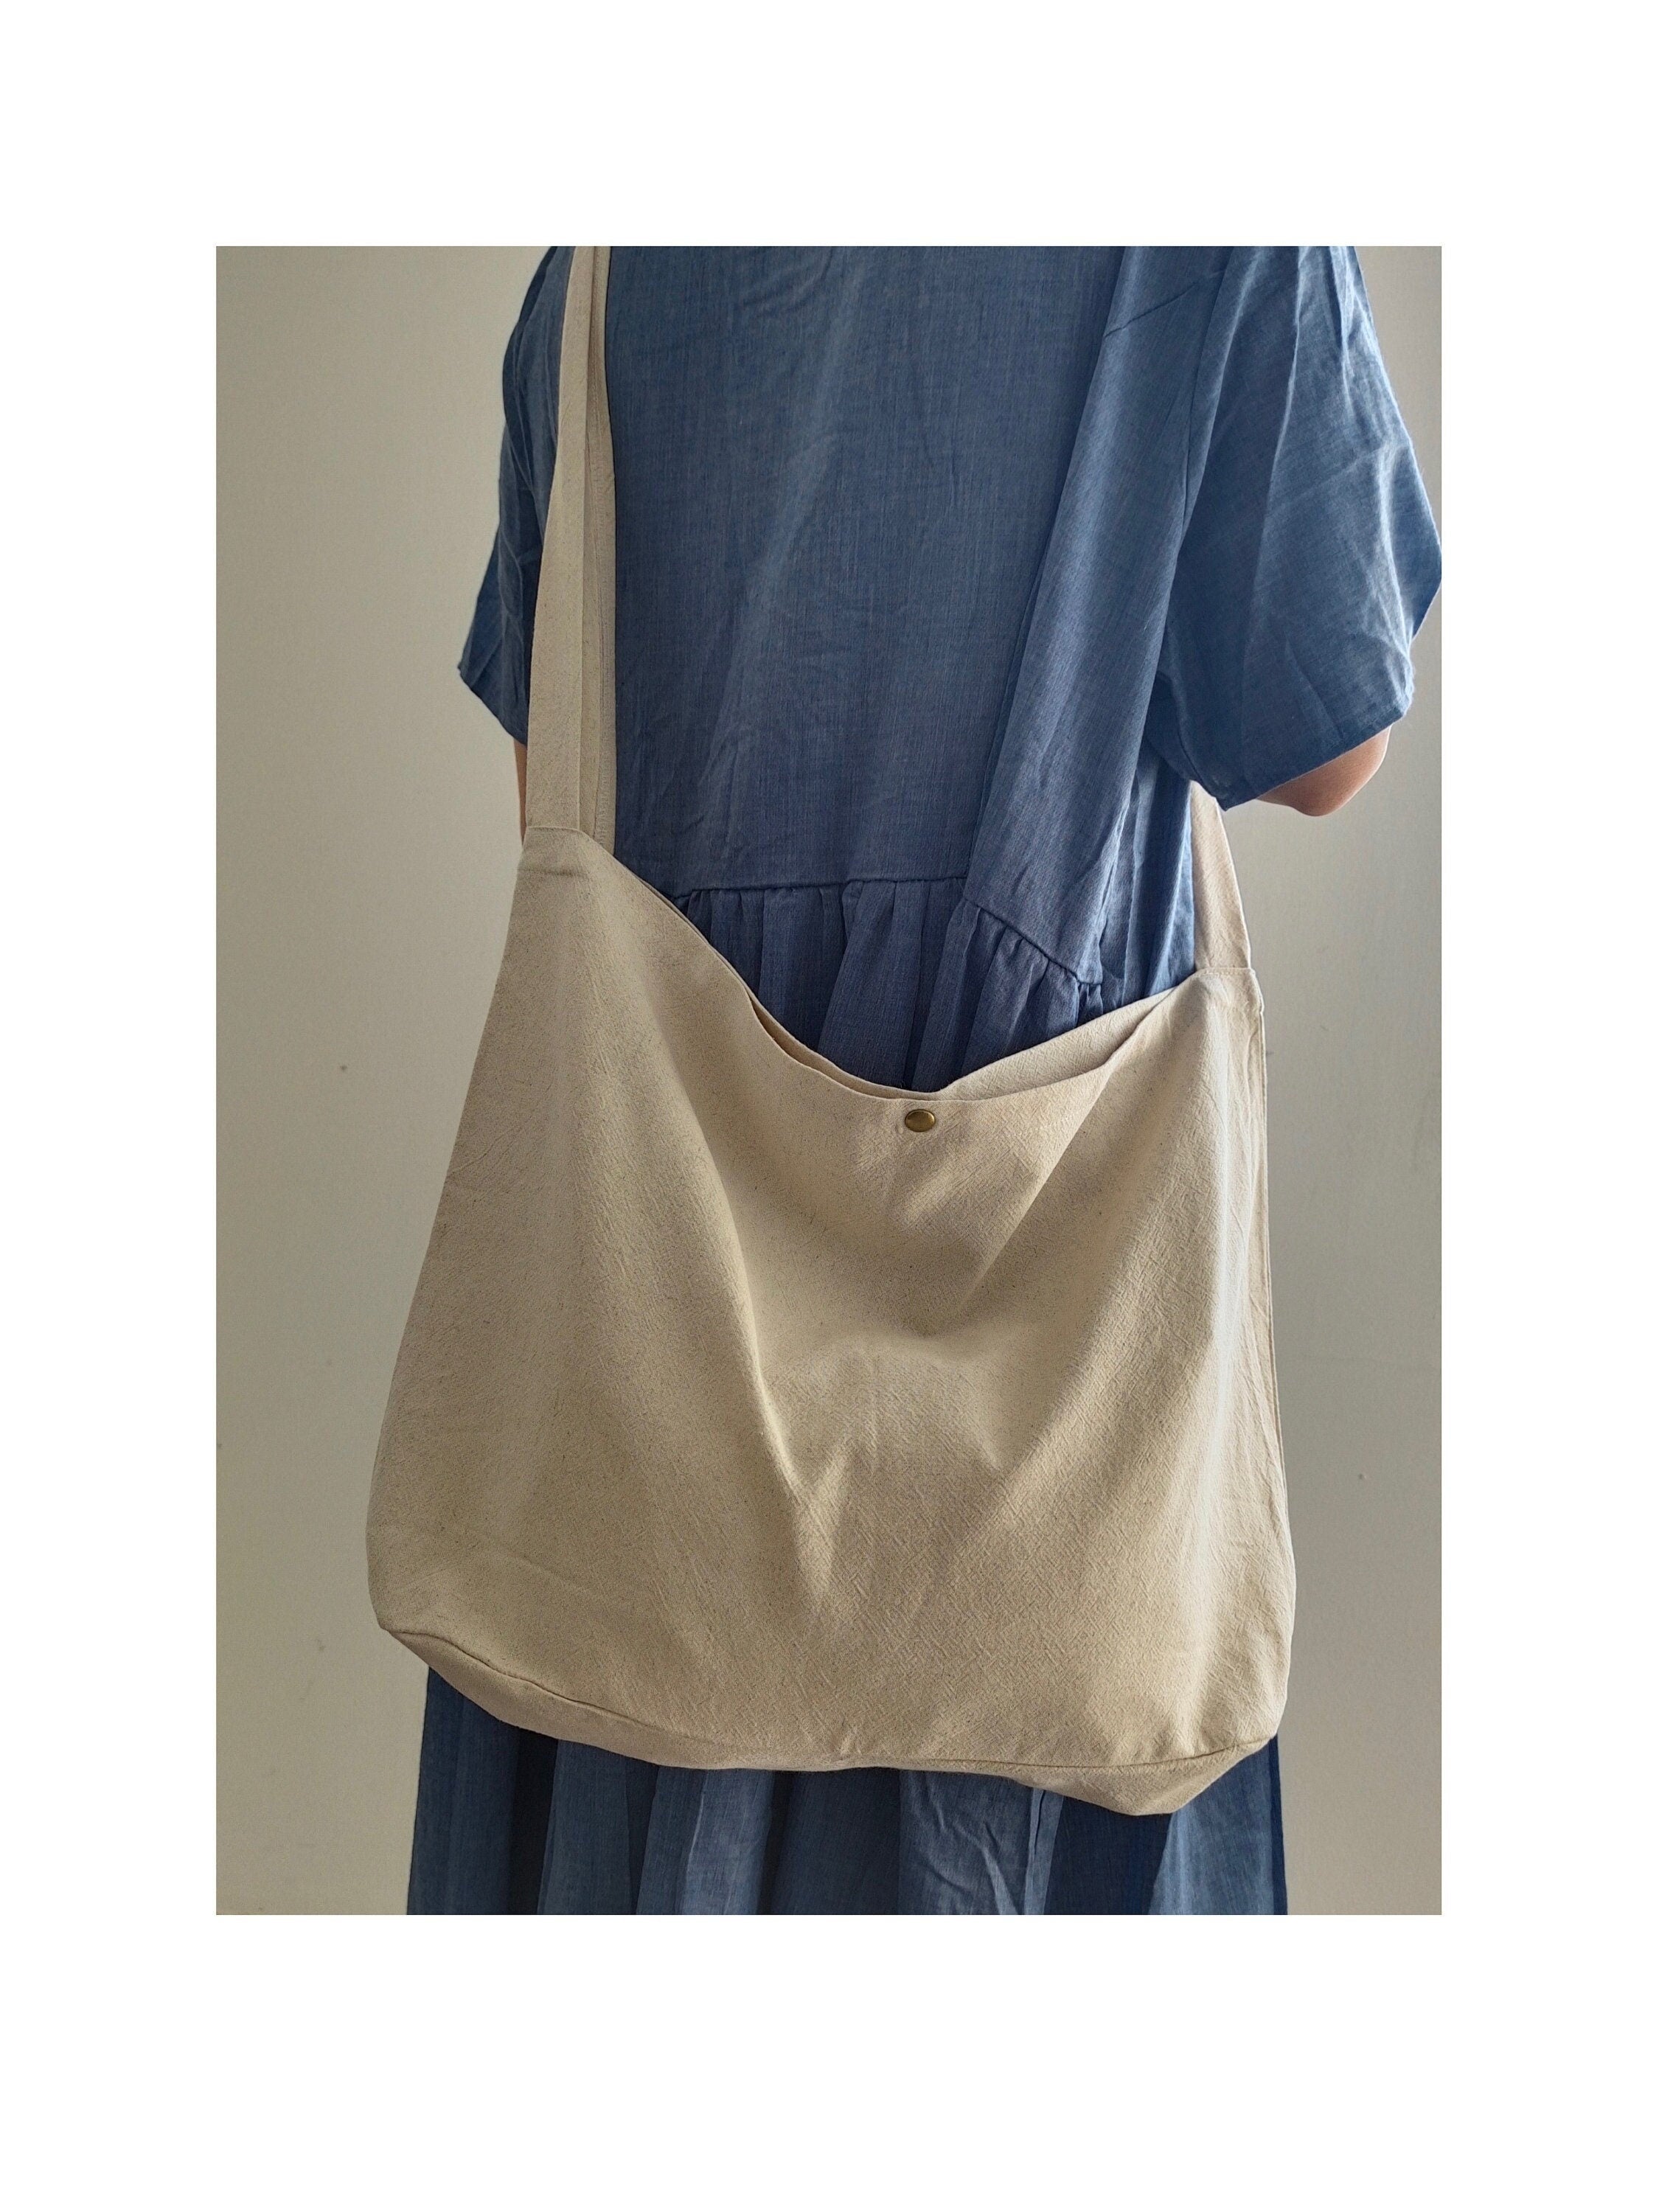 Crossbody bag, beige cotton linen school bag, market bag, tote bag,shopping bag ，travel bag，beach bag-Handmade, limited